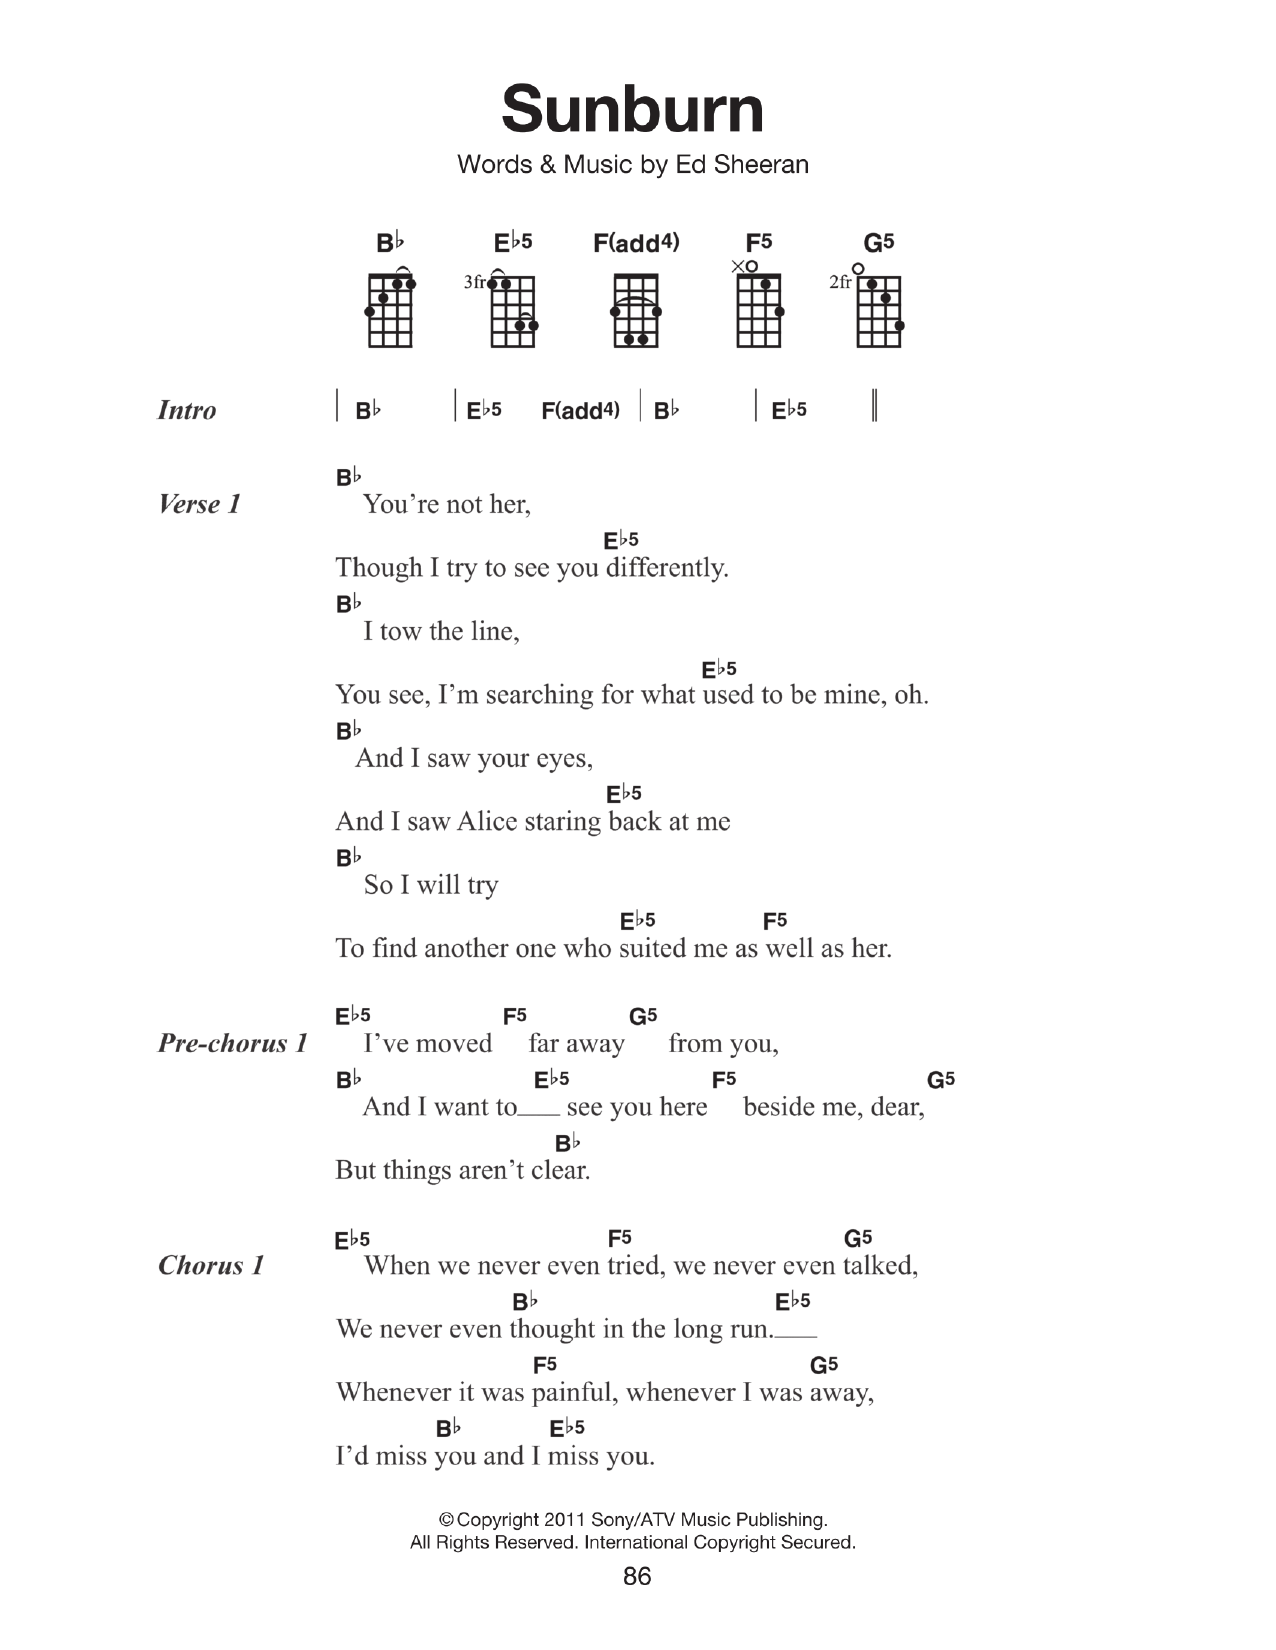 Ed Sheeran Sunburn sheet music notes and chords arranged for Piano, Vocal & Guitar Chords